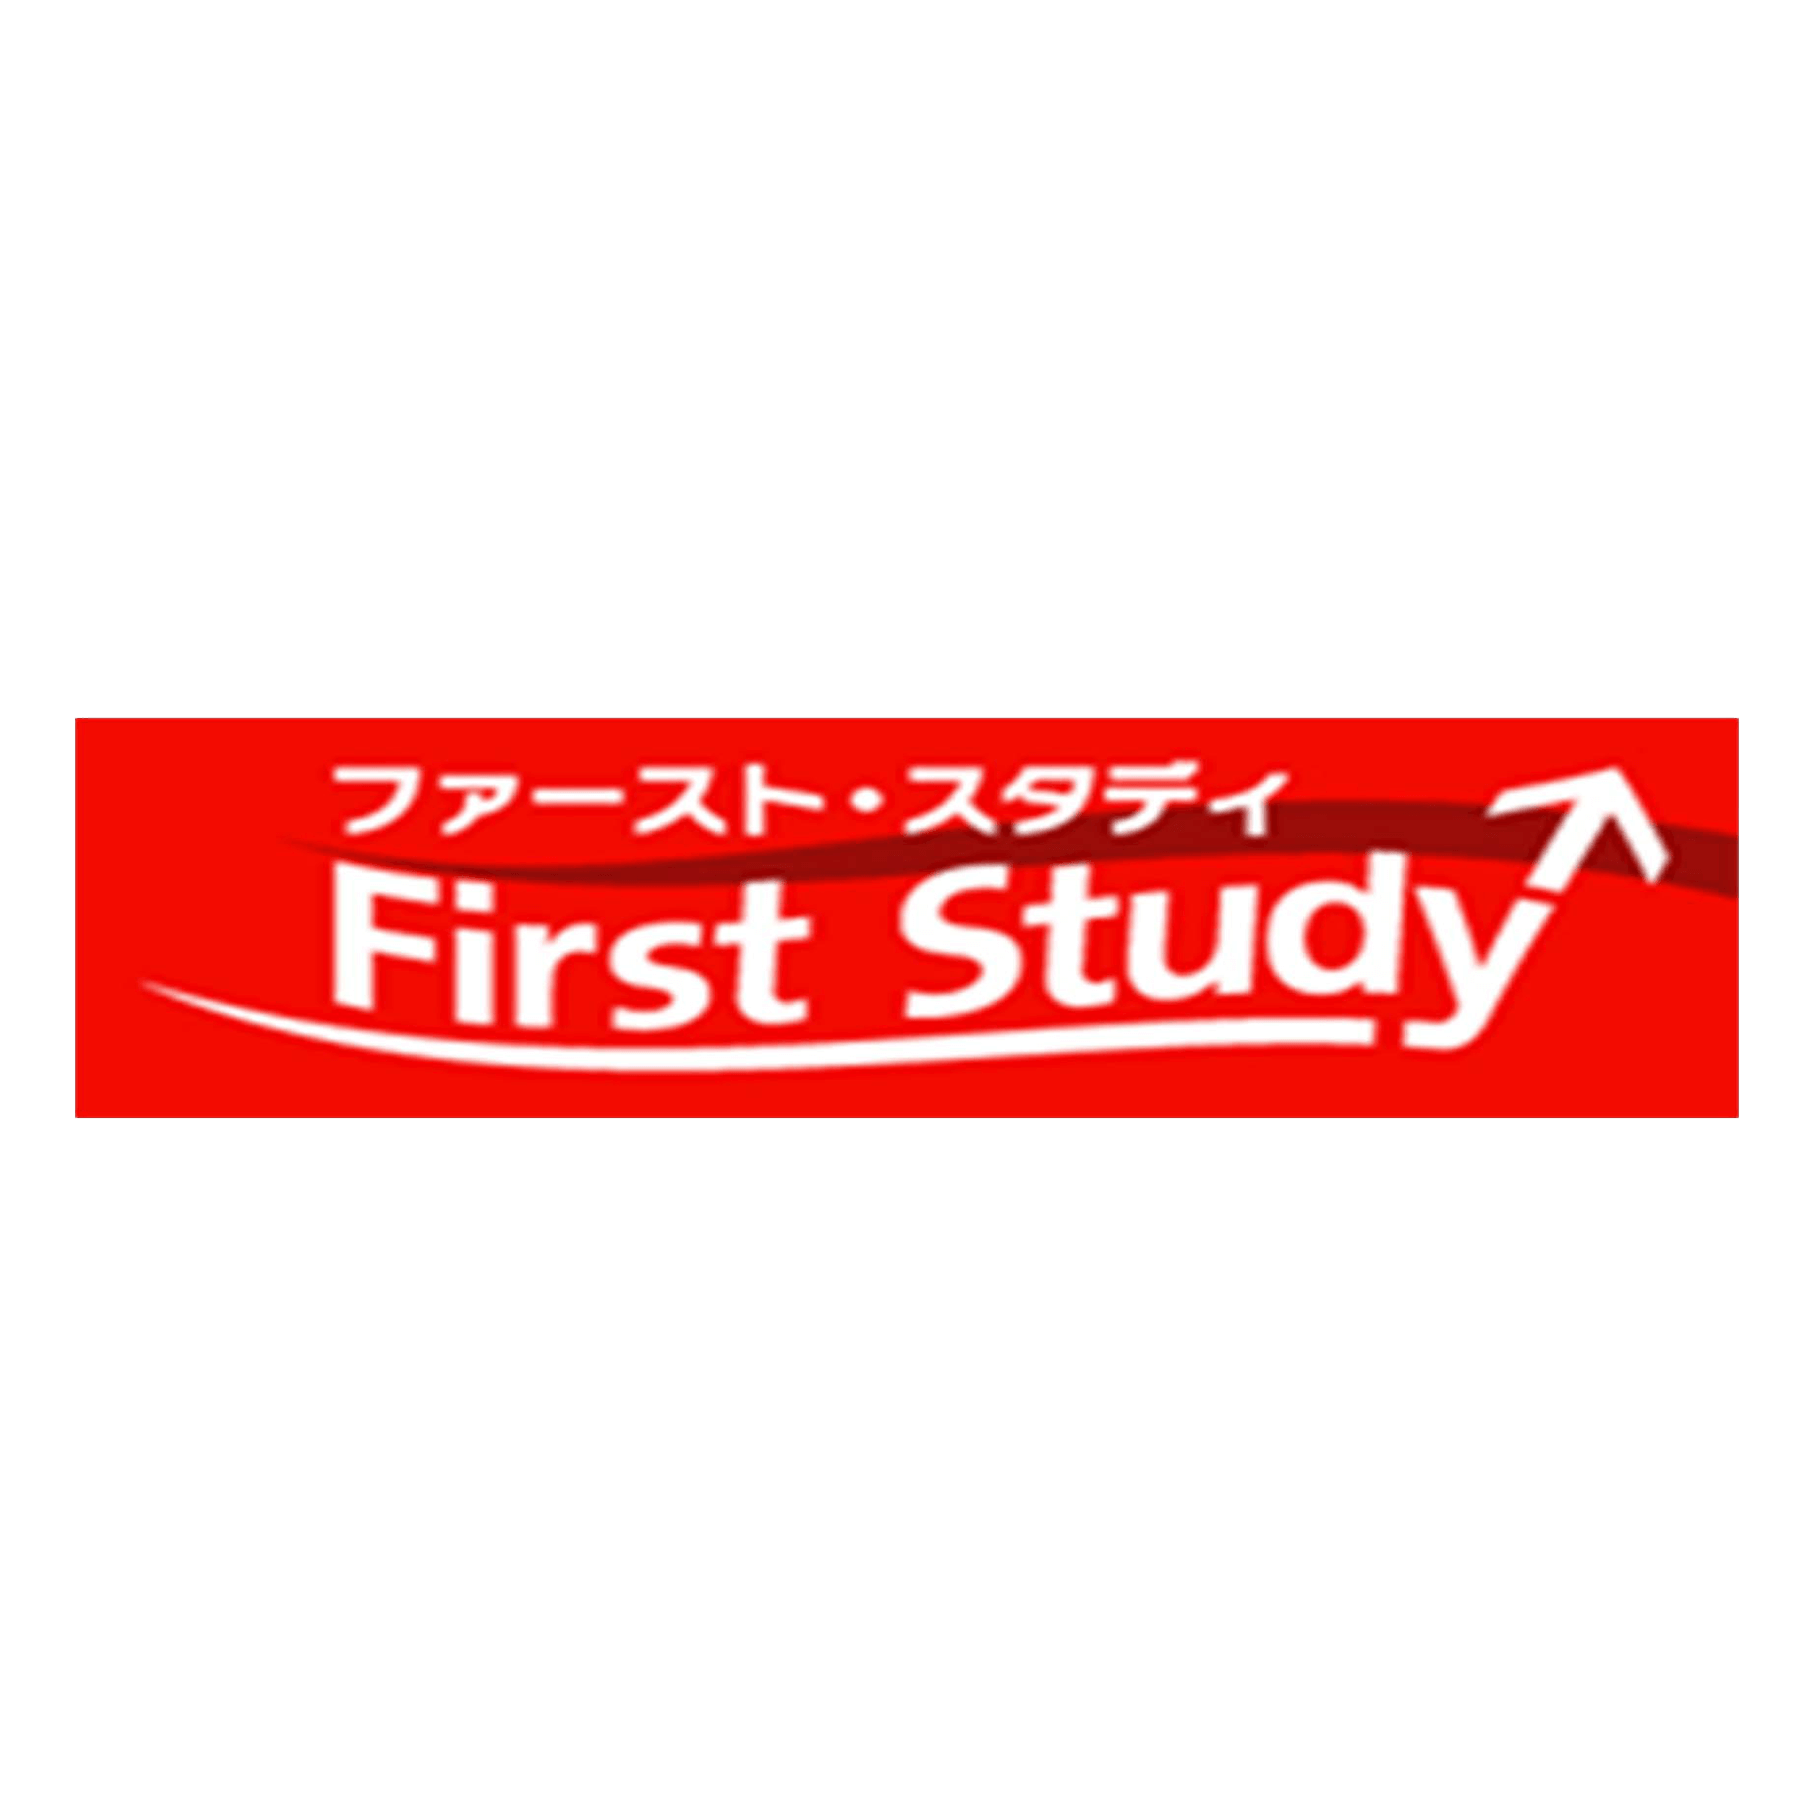 First Study